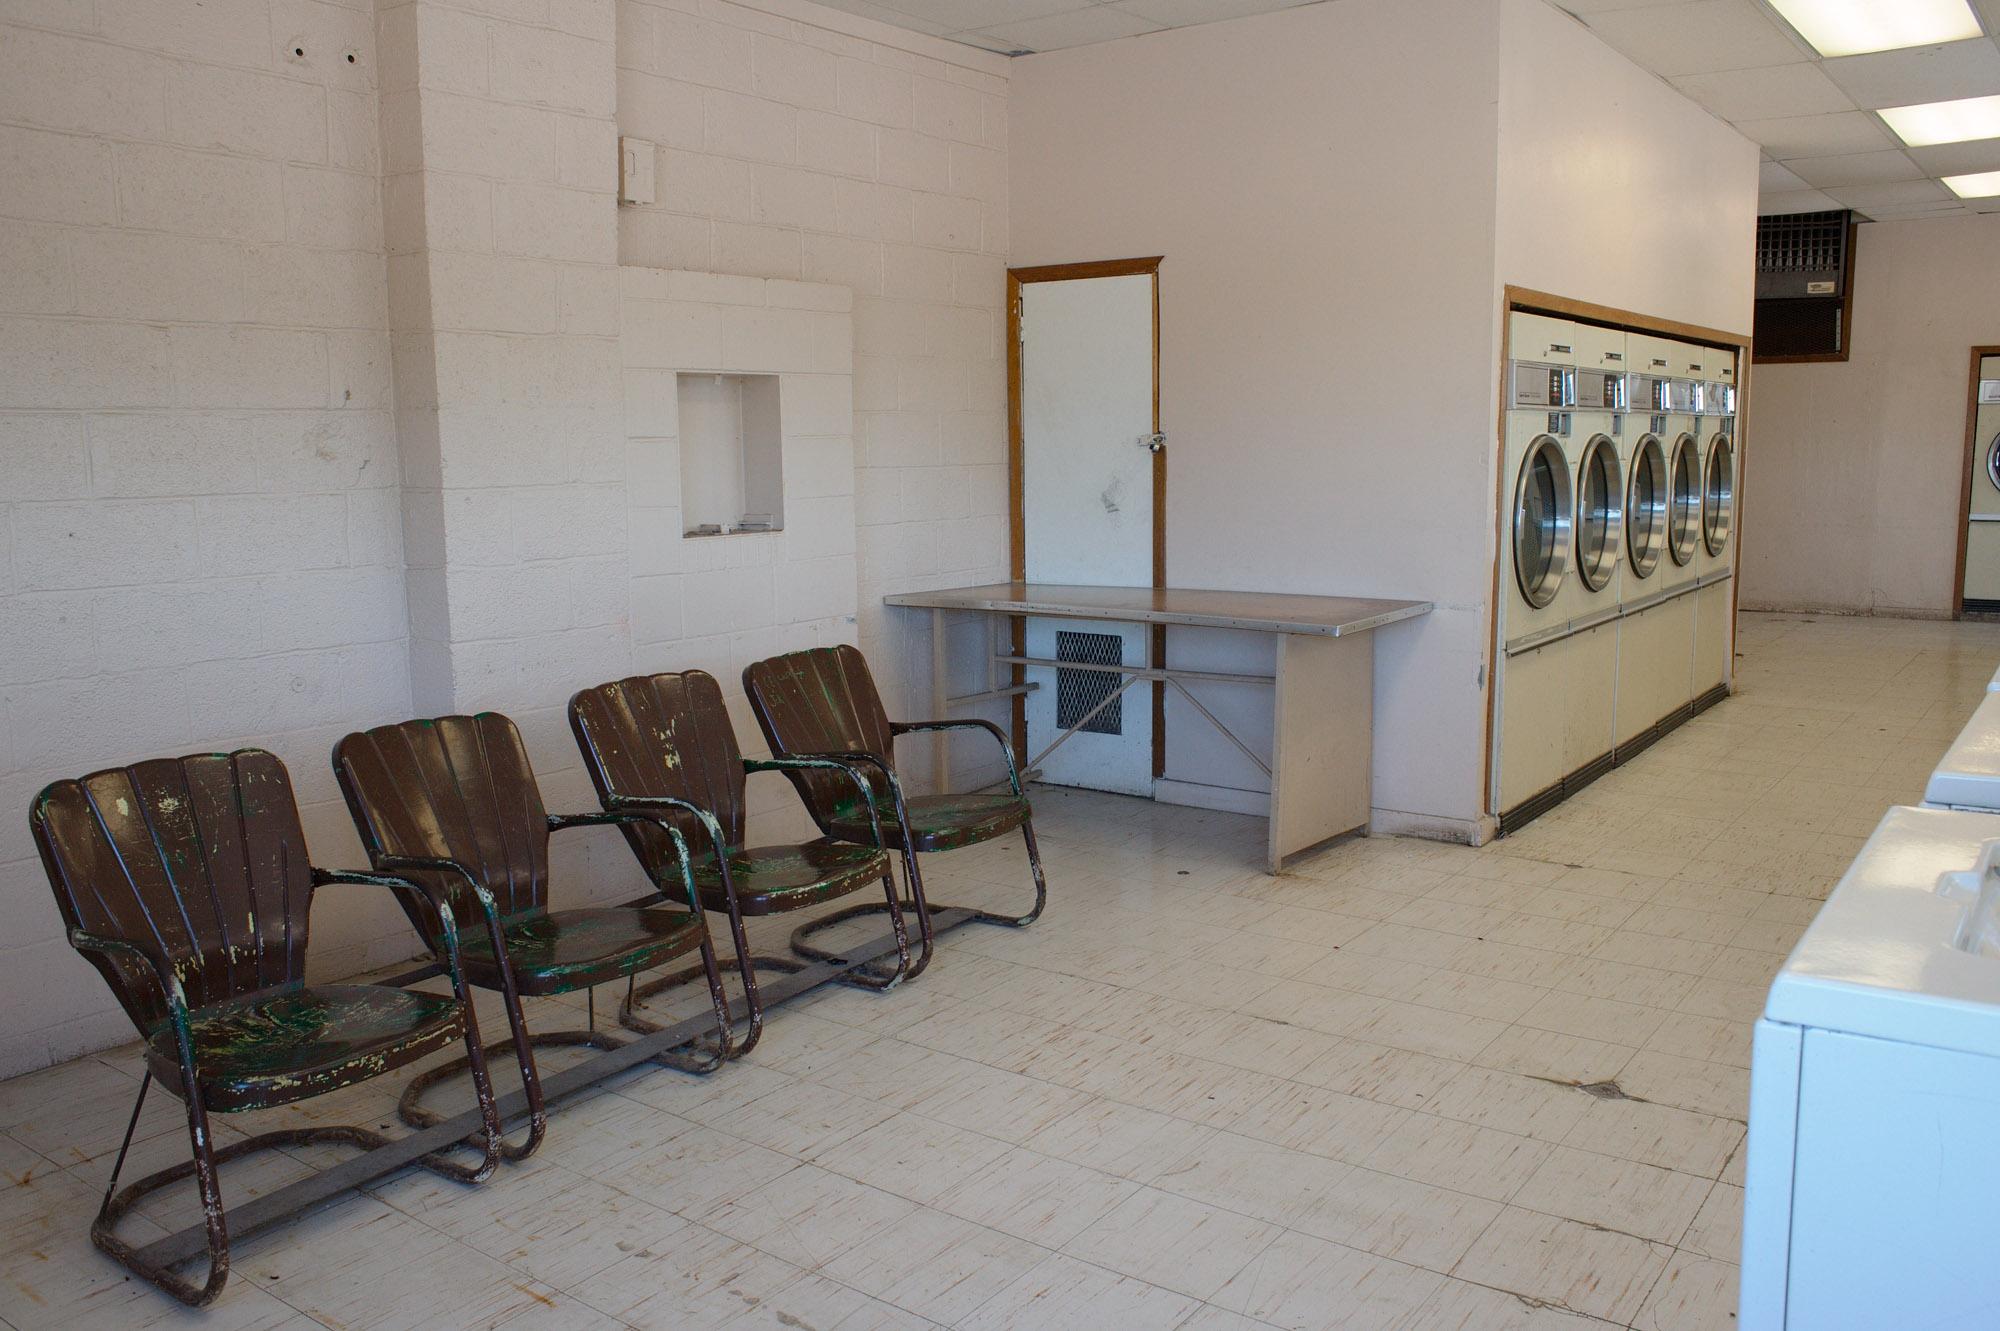 The Laundromat -  Sunnyside Landromat.   Lennox, South Dakota, USA. August...